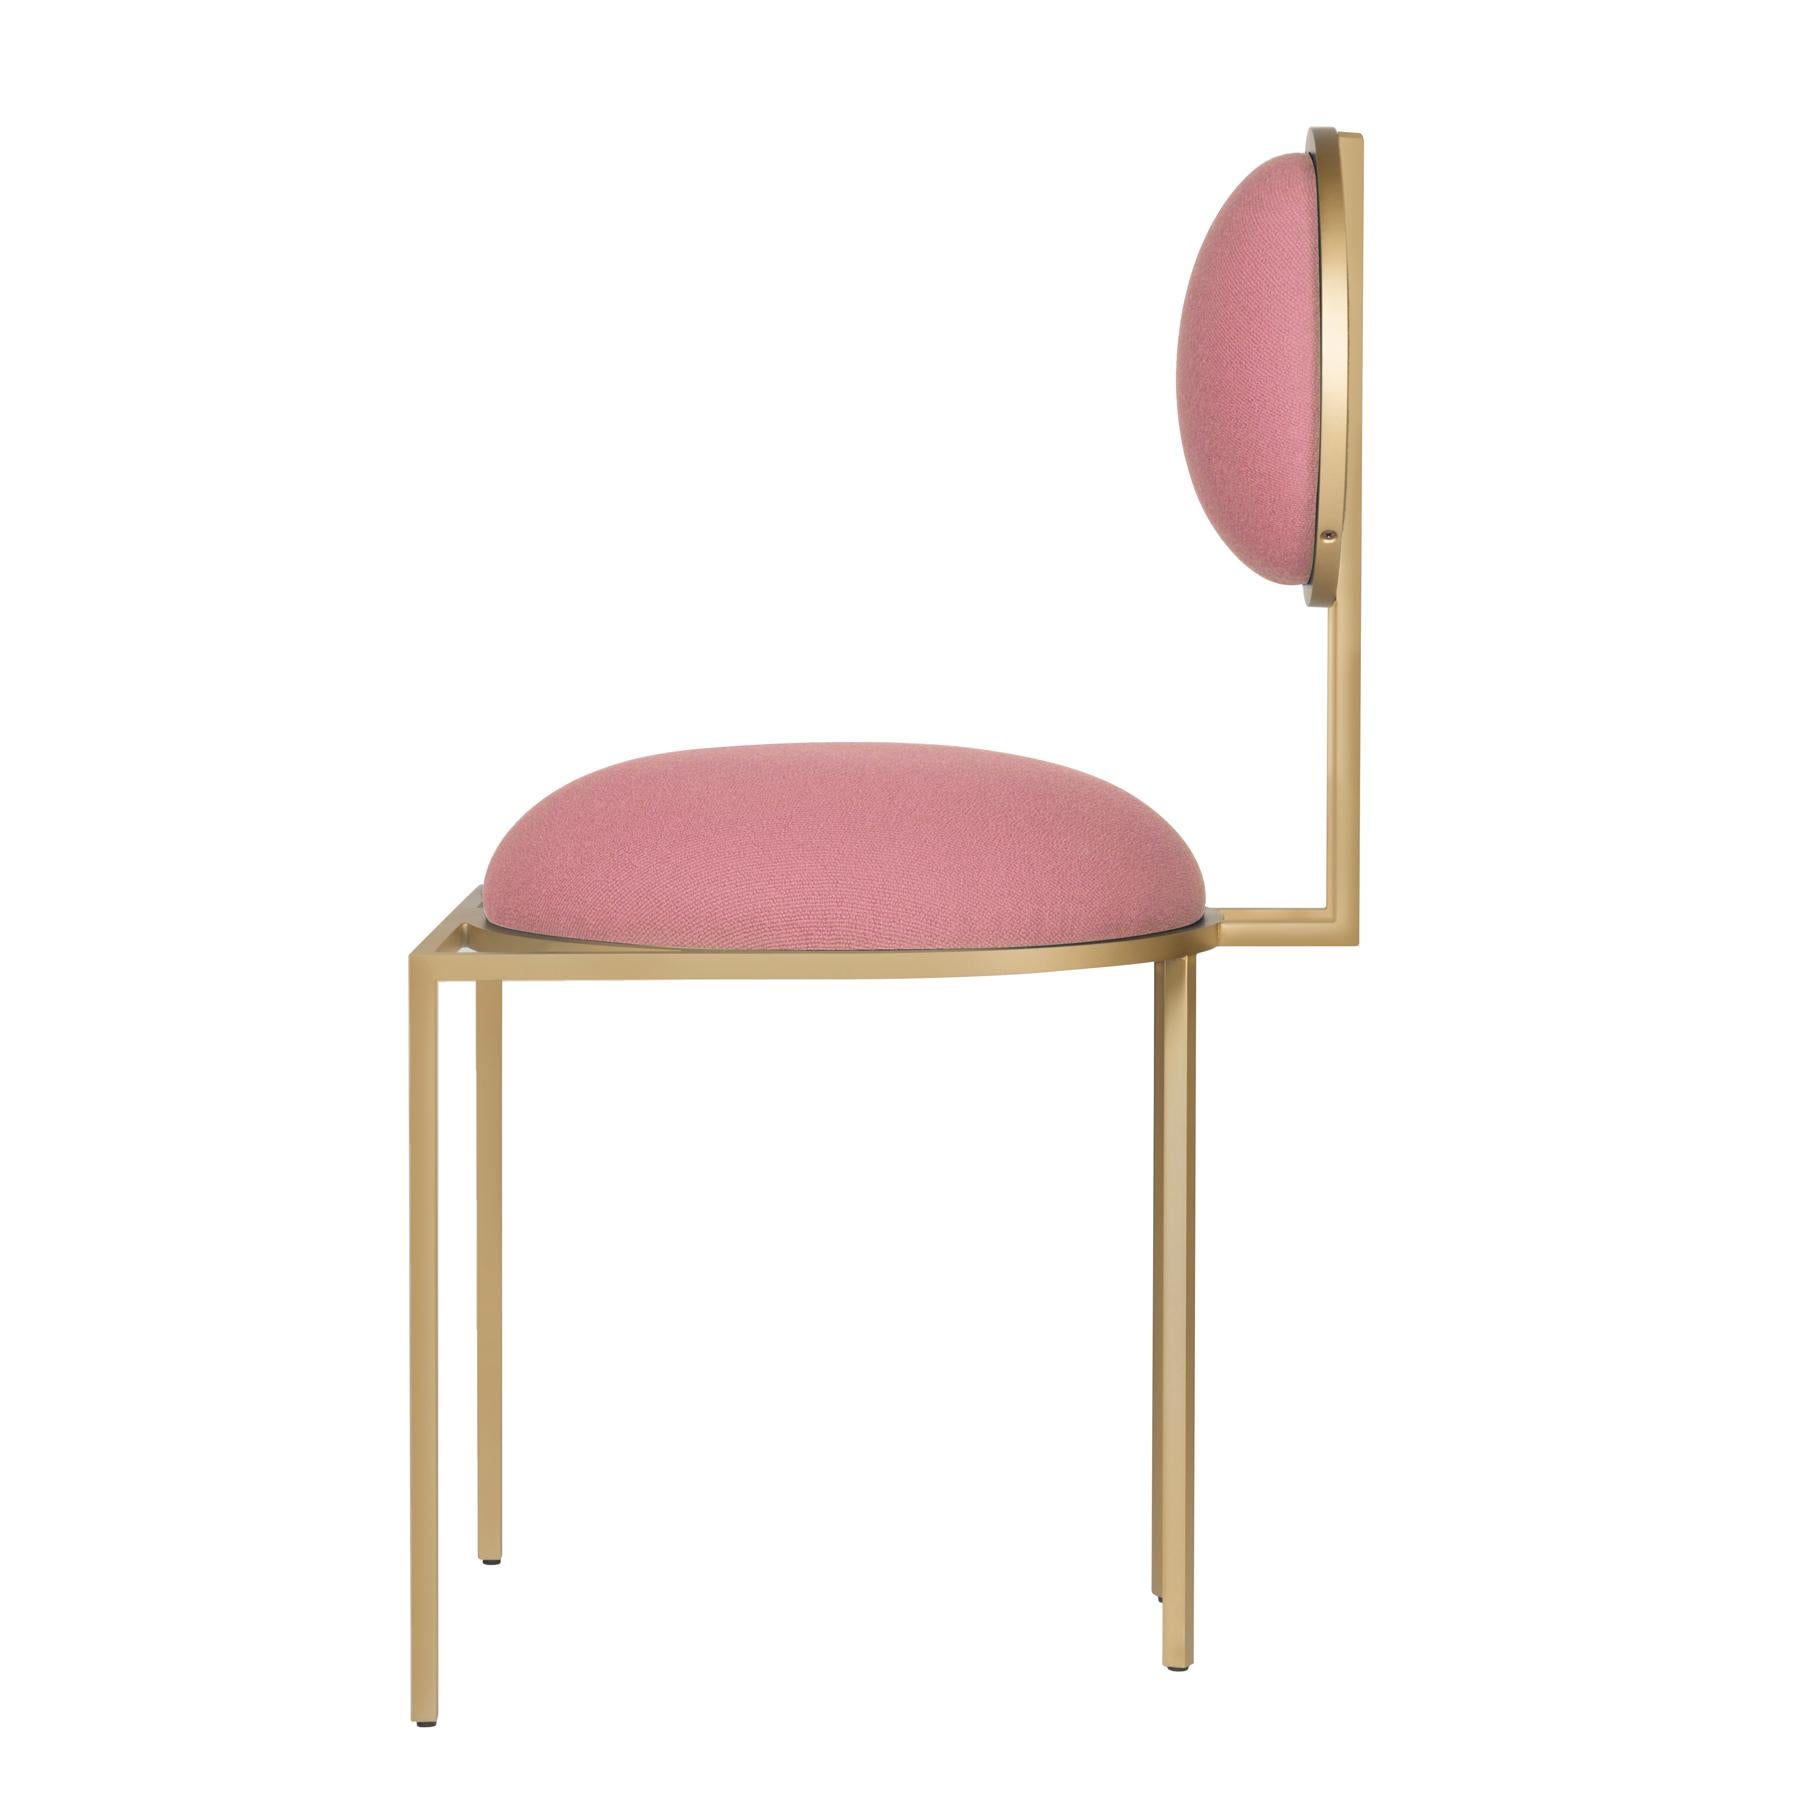 Modern Orbit Dining Chair in Pink Wool Fabric, Brushed Brass, by Lara Bohinc